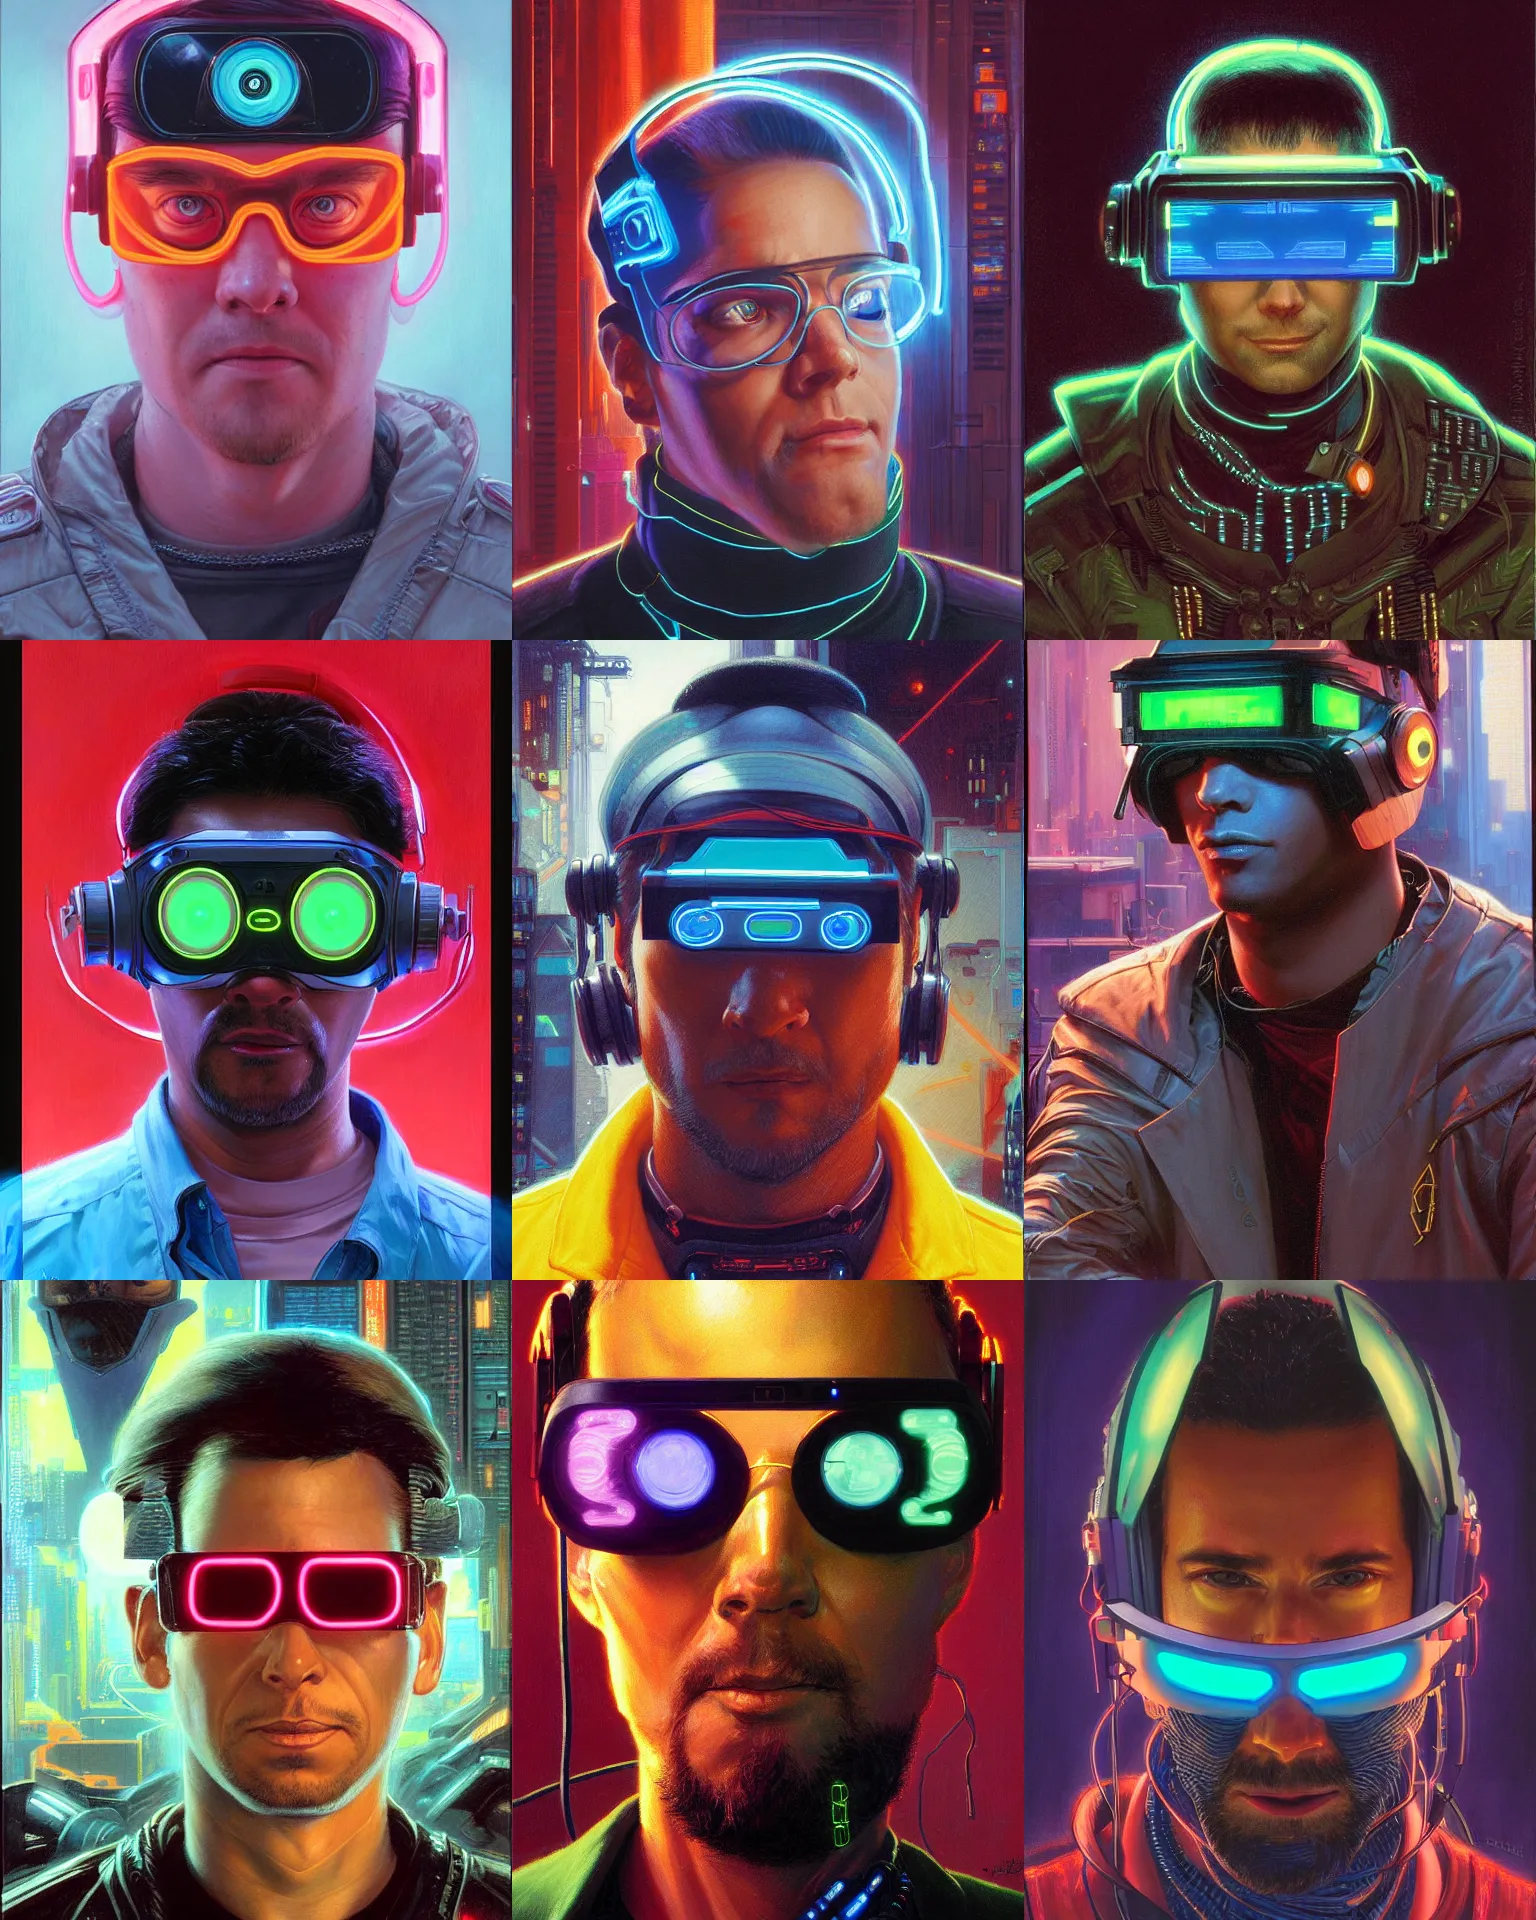 Prompt: digital neon cyberpunk programmer with geordi eye visor and headset headshot portrait painting by donato giancola, kilian eng, john berkley, hayao miyazaki, j. c. leyendecker, mead schaeffer